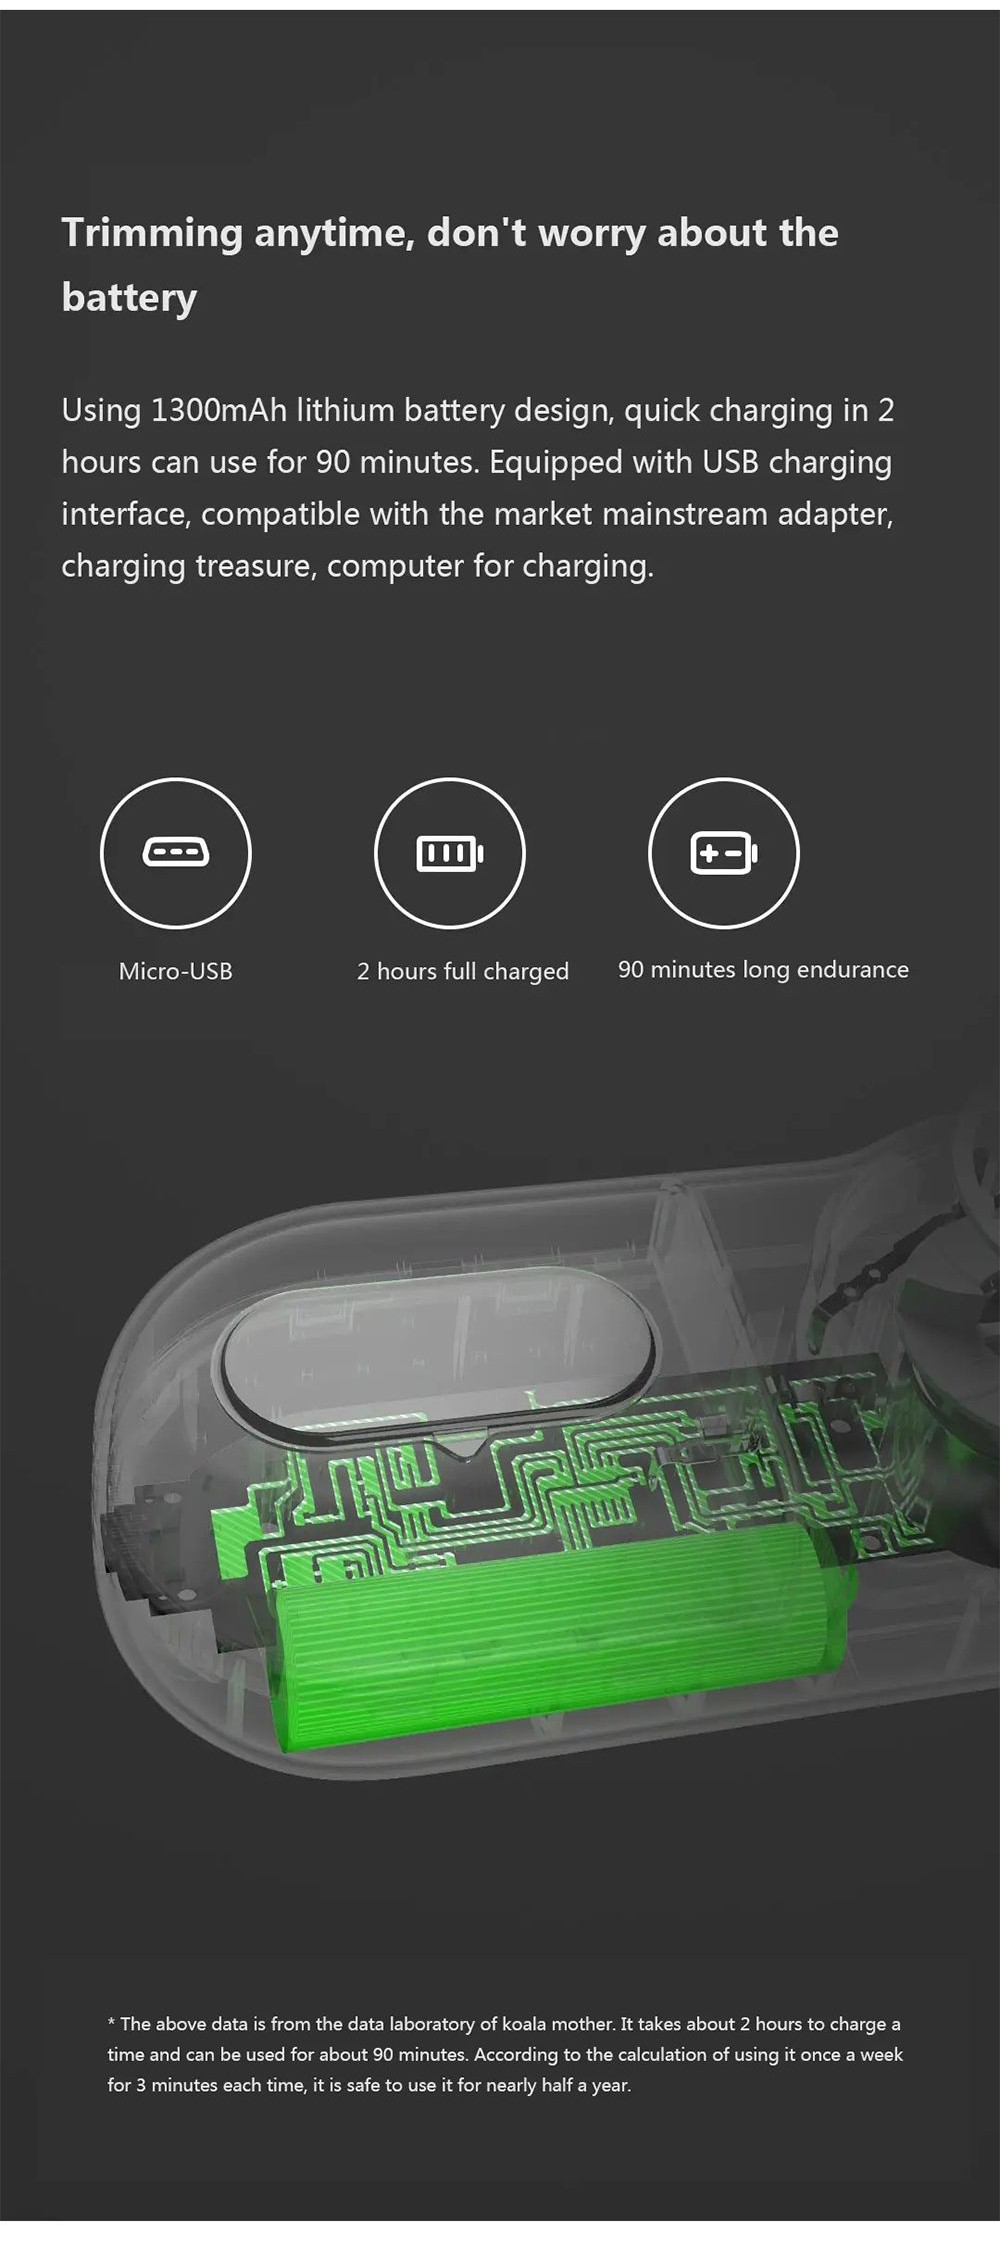 Xiaomi Mijia Lint Remover Fuzz Trimmer 0.35mm Micro-arc Steel Mesh 5-blade Wervelwind Drijvende Kop - Wit